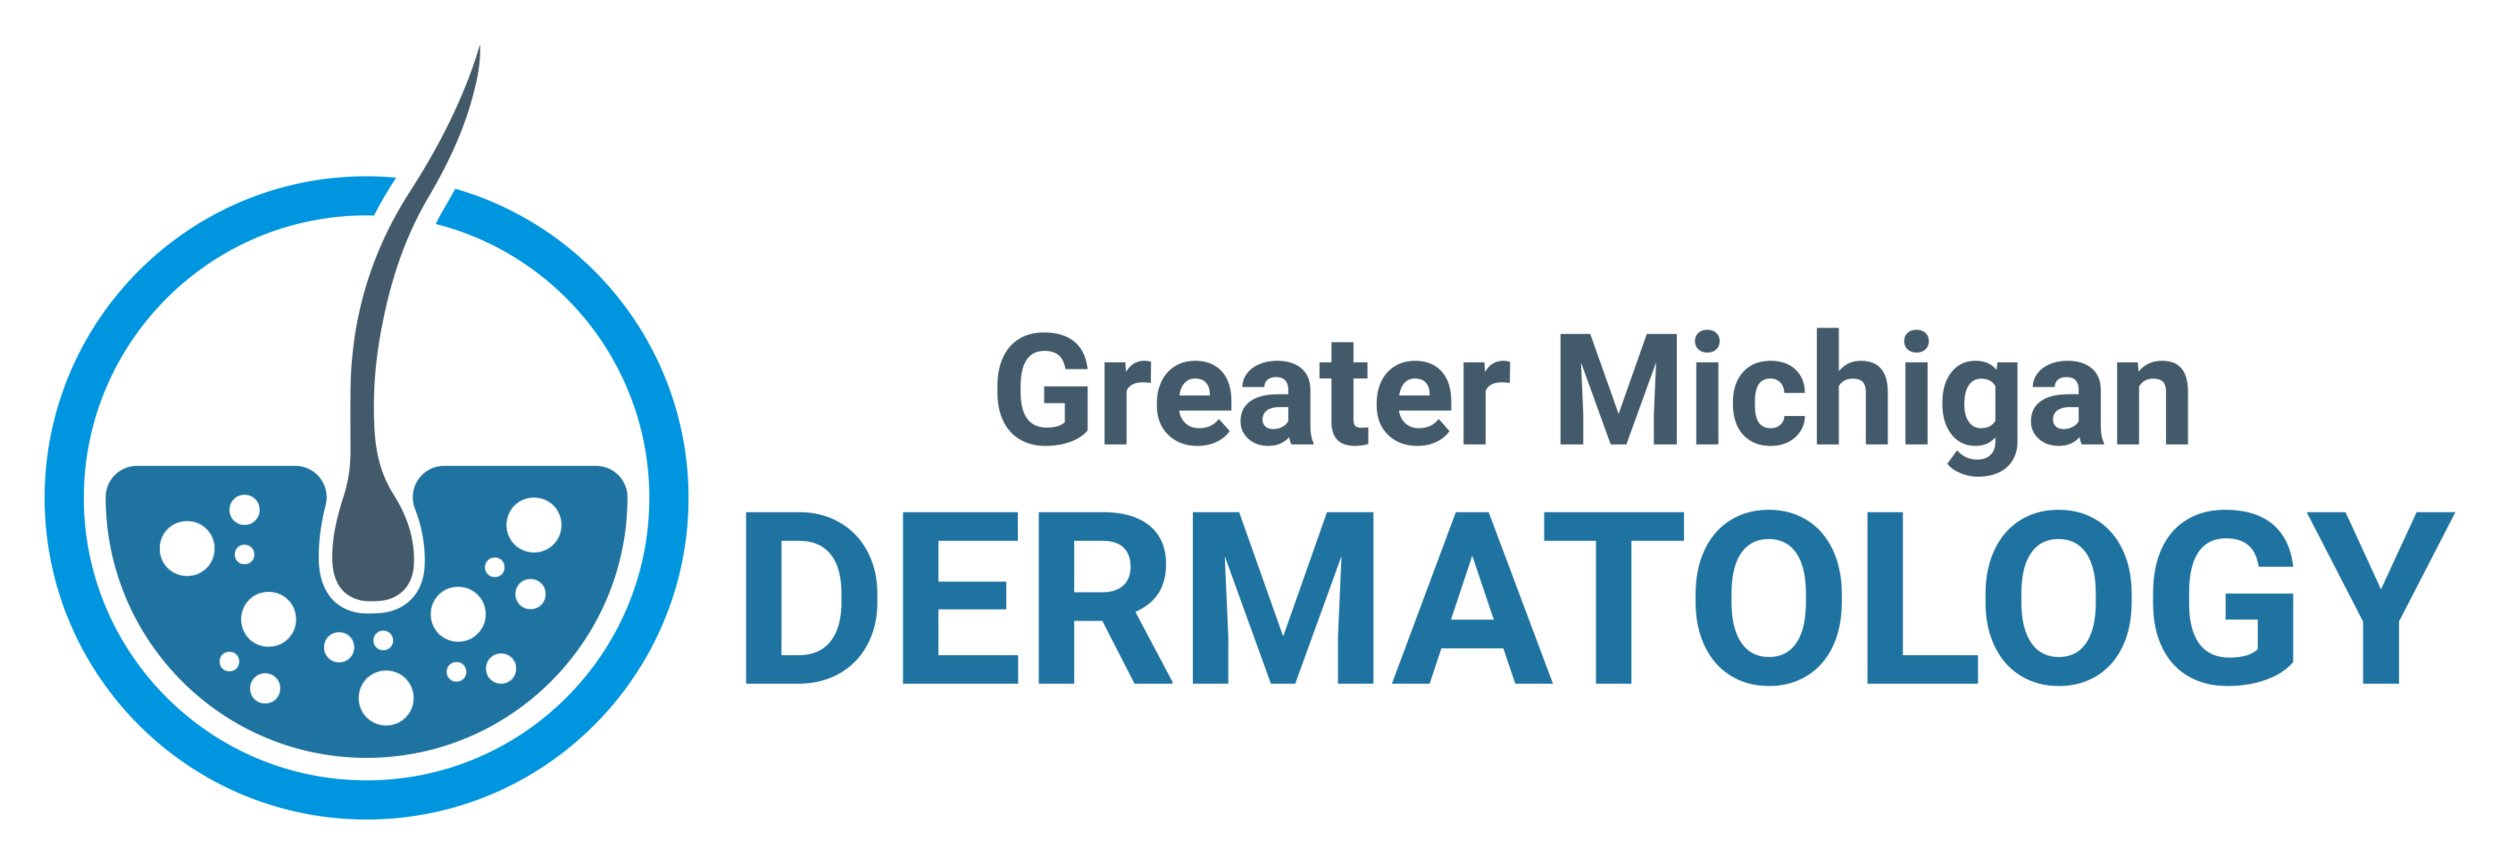 Greater Michigan Dermatology